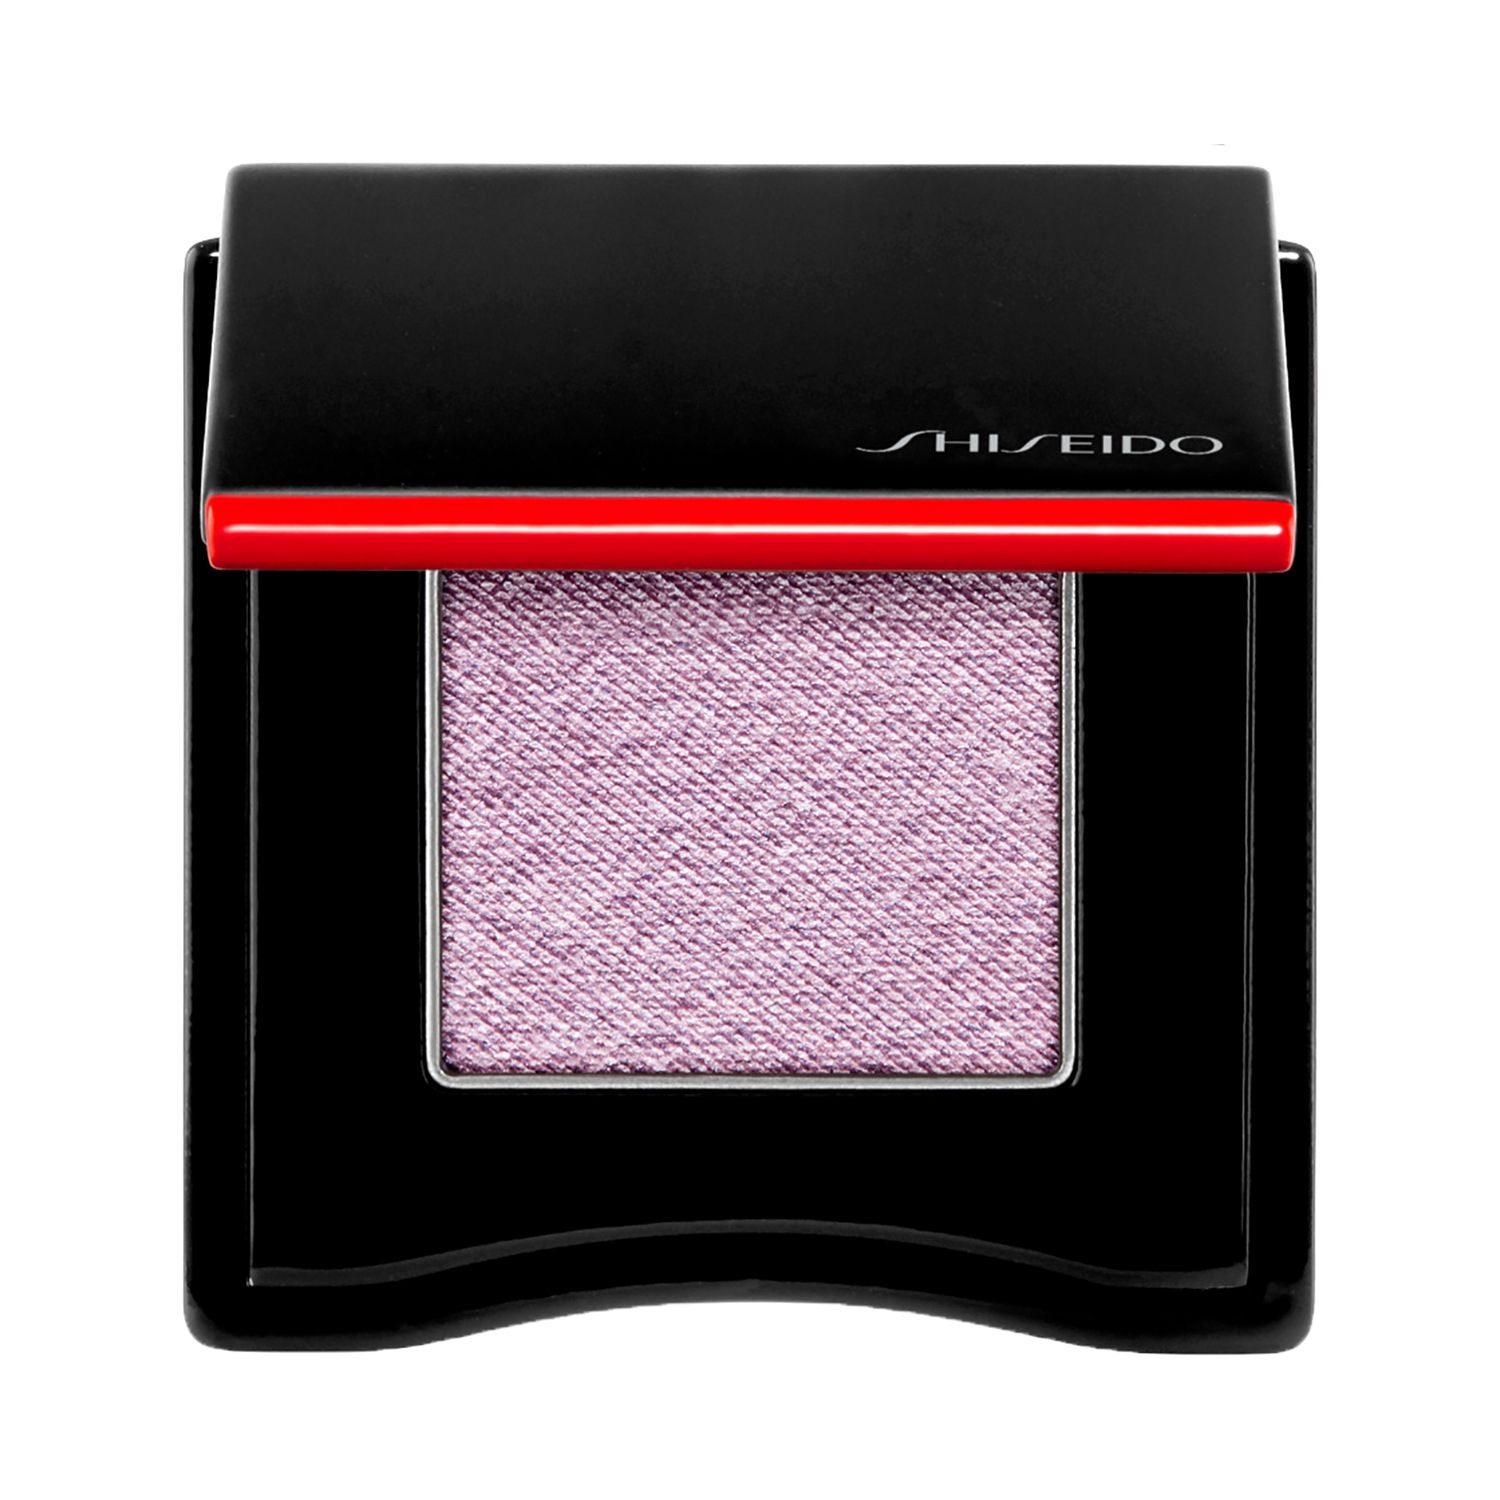 Shiseido Pop Powdergel Eye Shadow - 10 Pachi Lilac (2.2g)